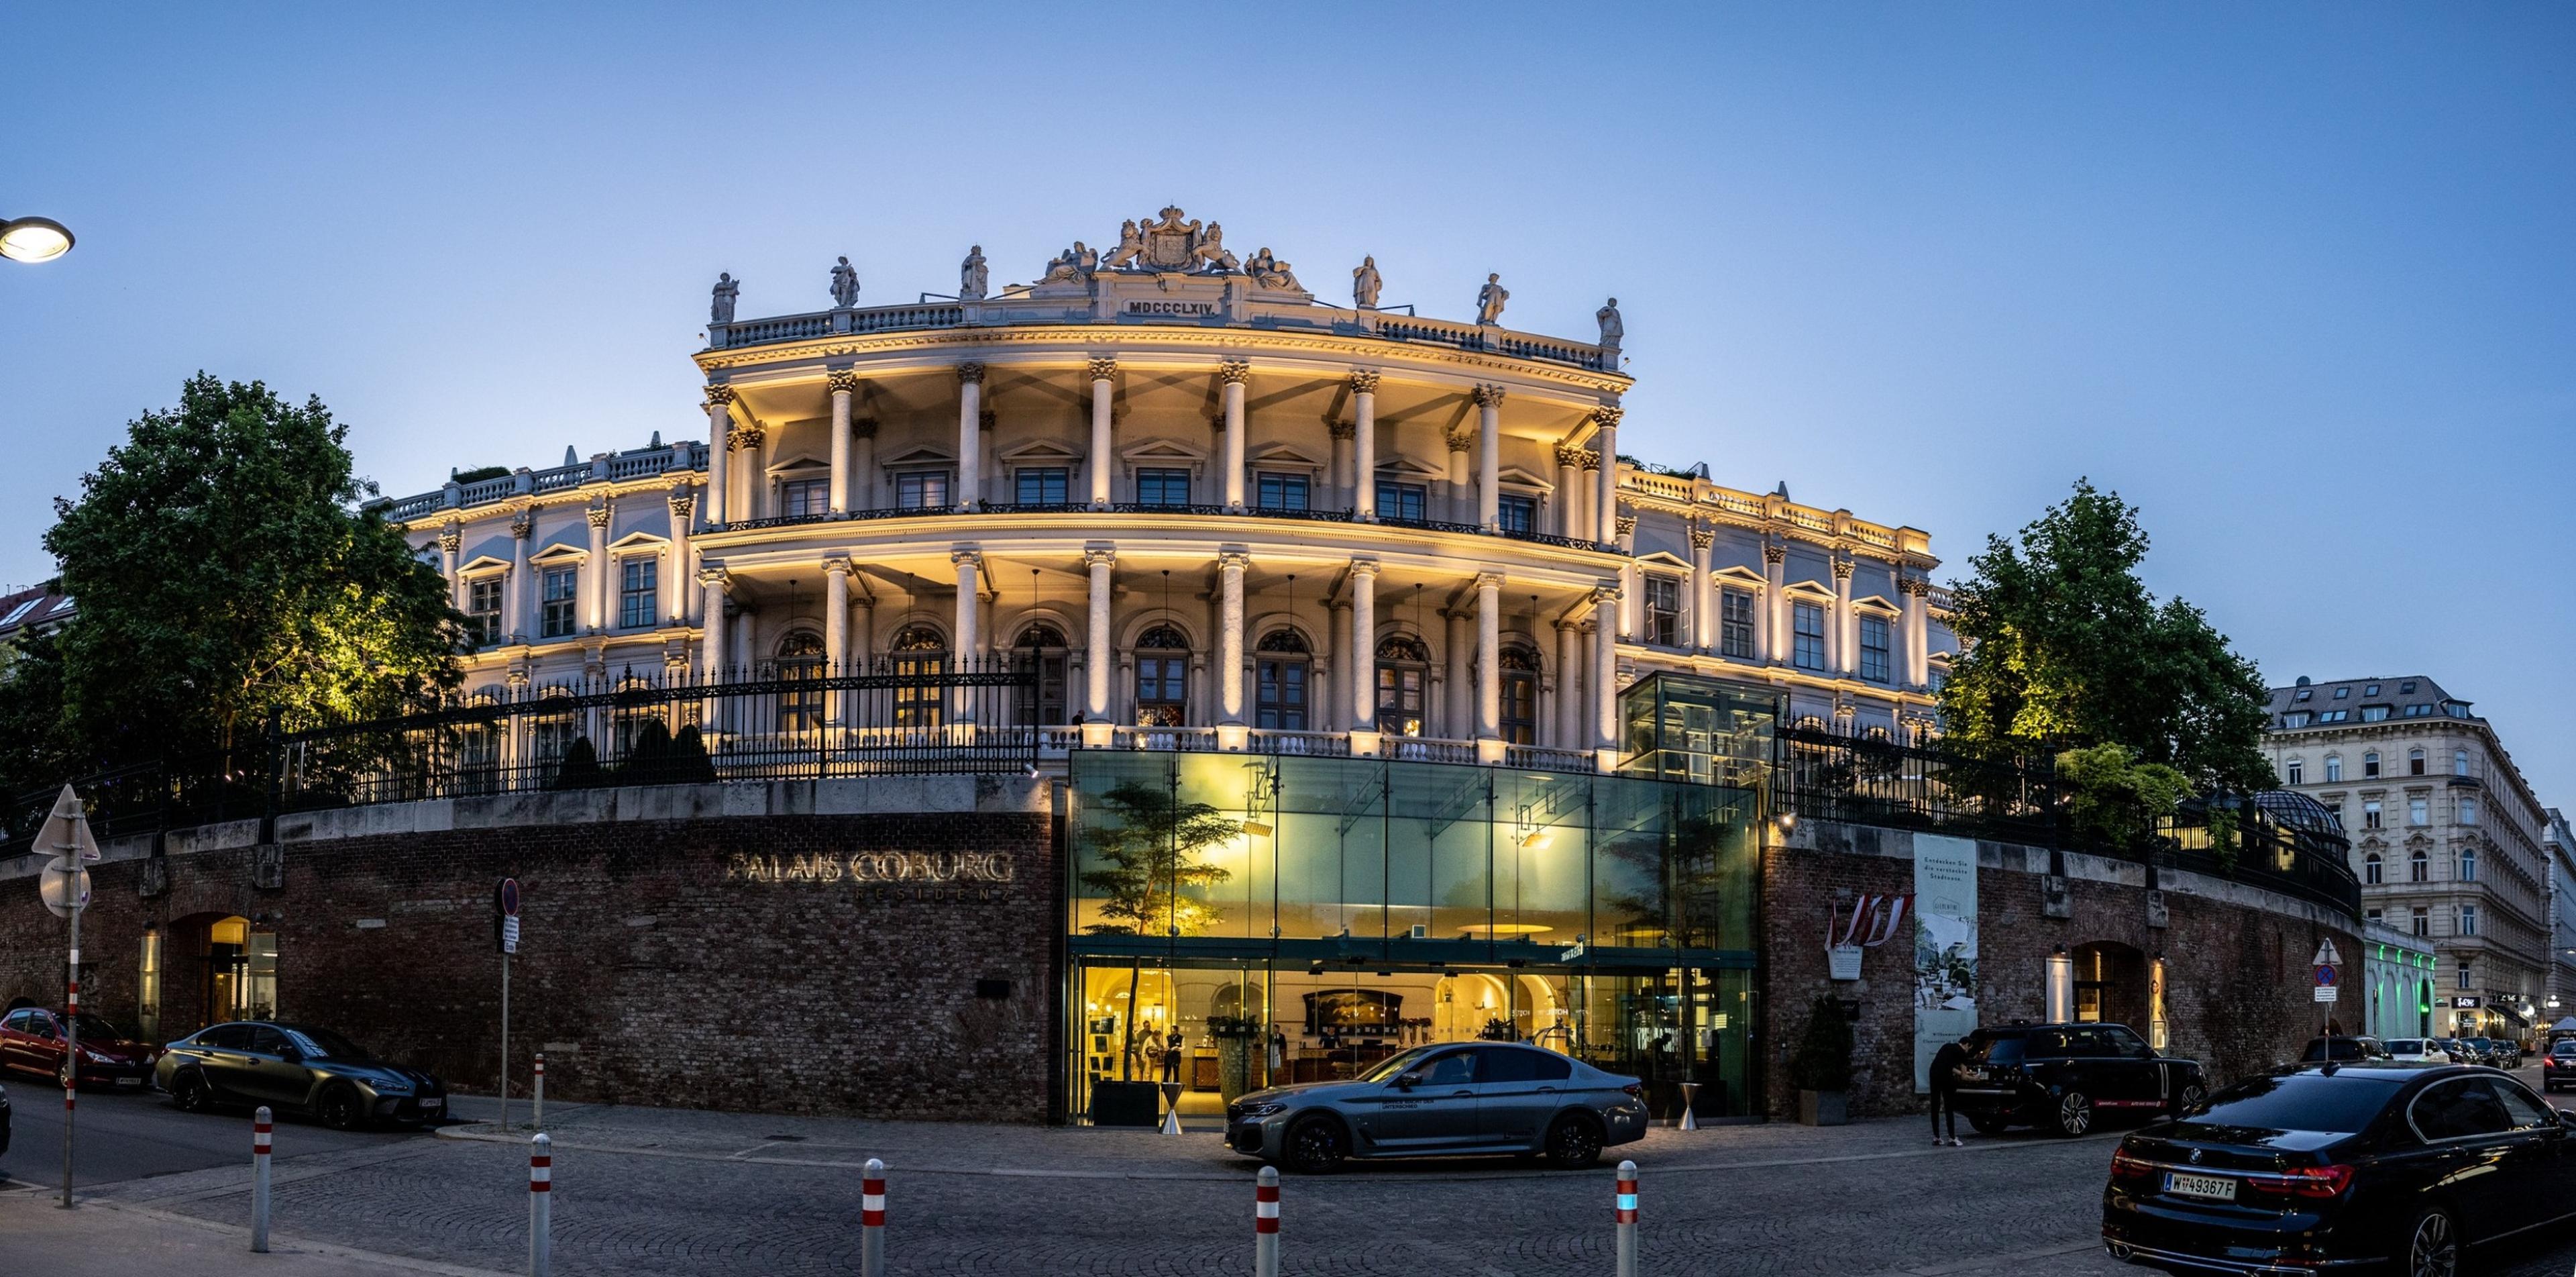 Palais Coburg Hotel Residenz - Vienna, Austria